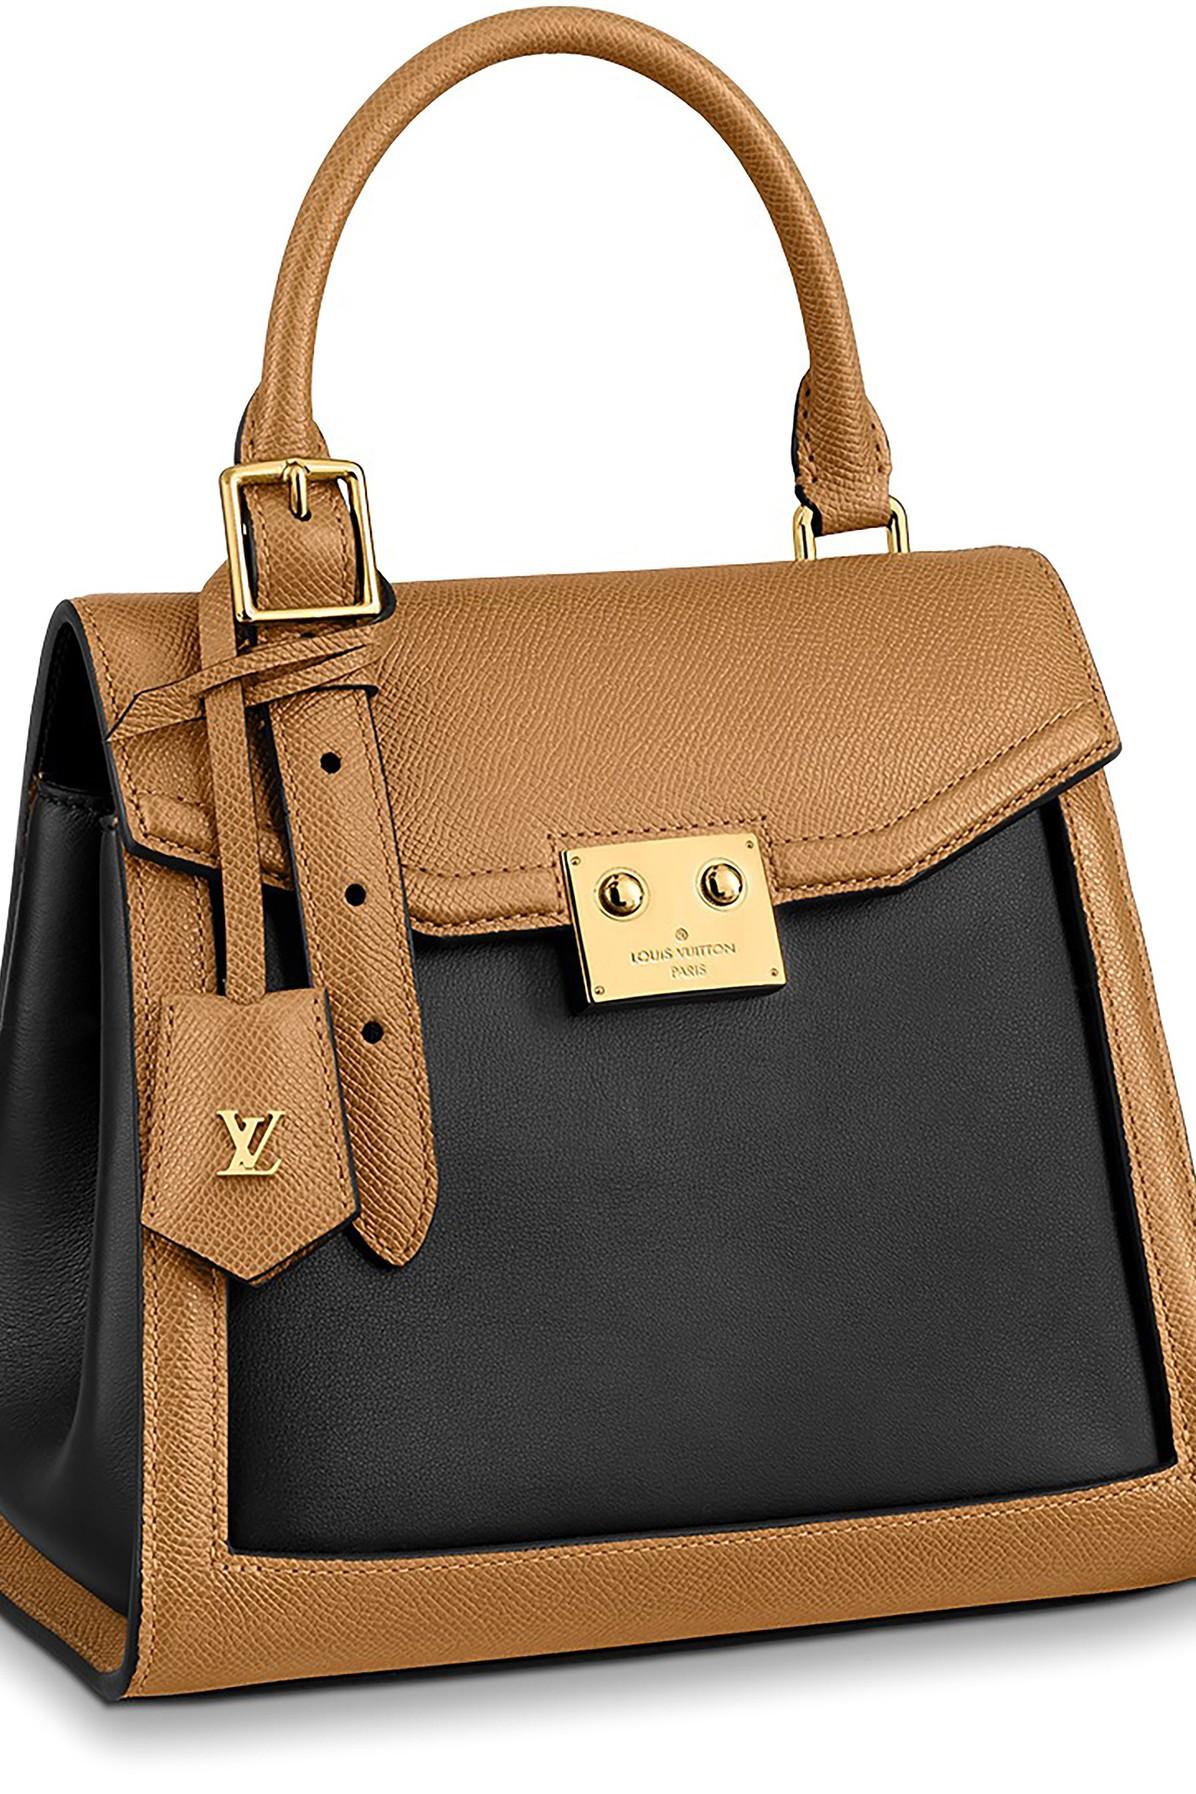 LV Rep. $250  Bags, Cheap louis vuitton handbags, Leather bag women  handbags